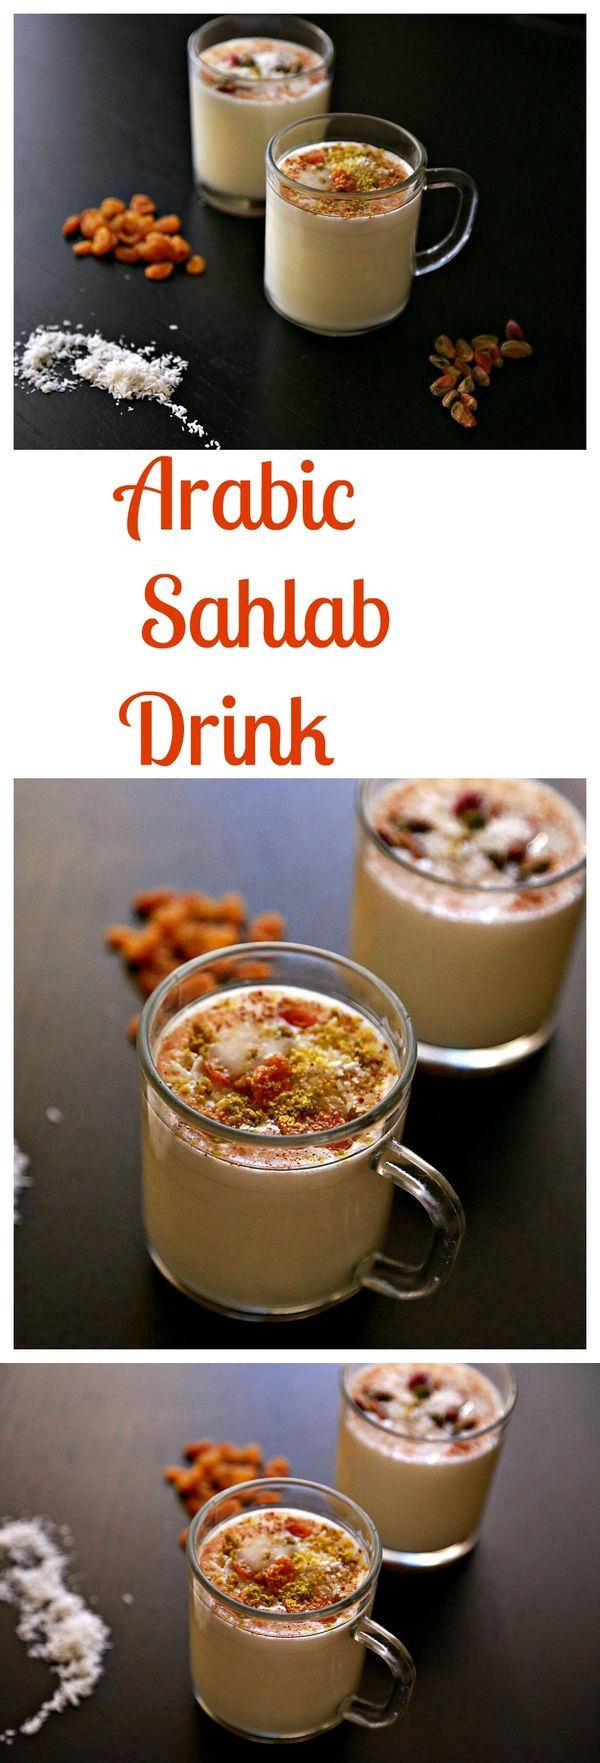 Arabic Sahlab drink